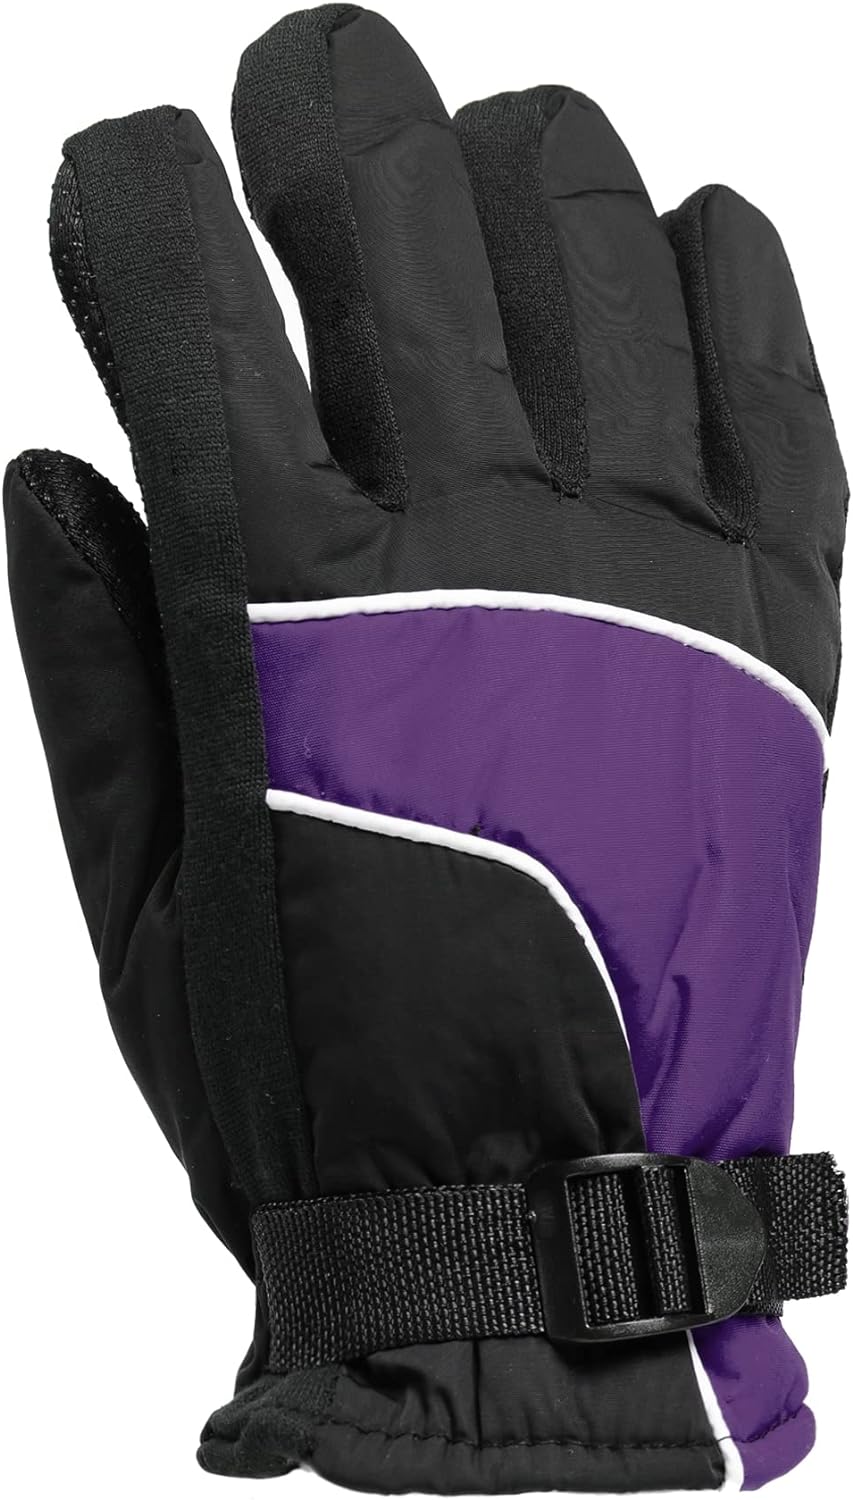 Yacht & Smith Kids Ski Glove, Fleece Lined Water Resistant Bulk Kids Winter Gloves (12 PACK ASSORTED)